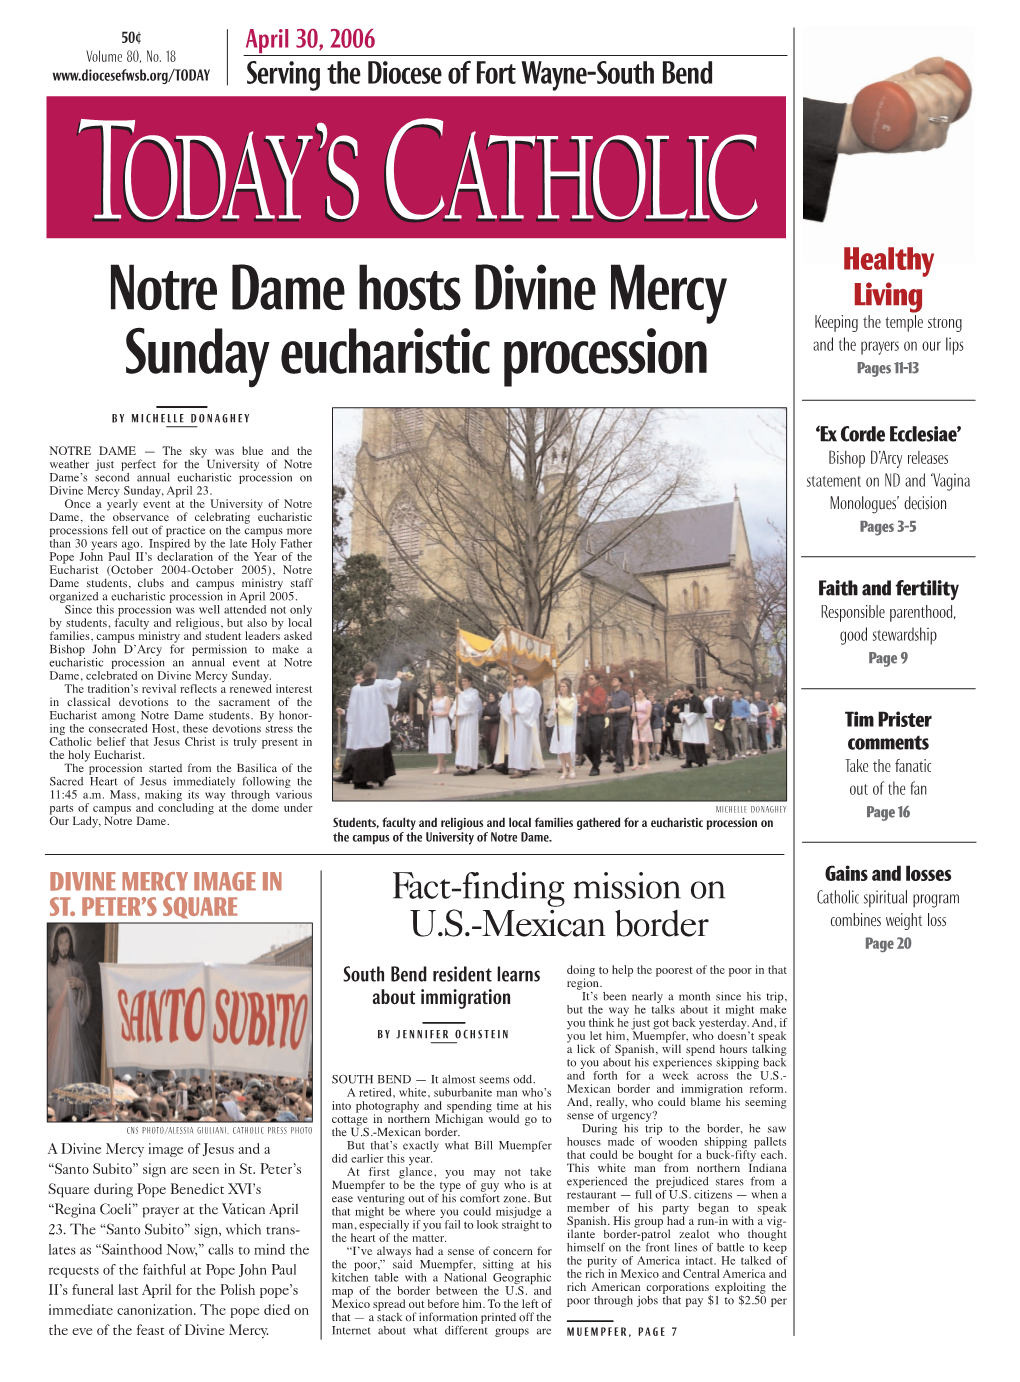 Notre Dame Hosts Divine Mercy Sunday Eucharistic Procession